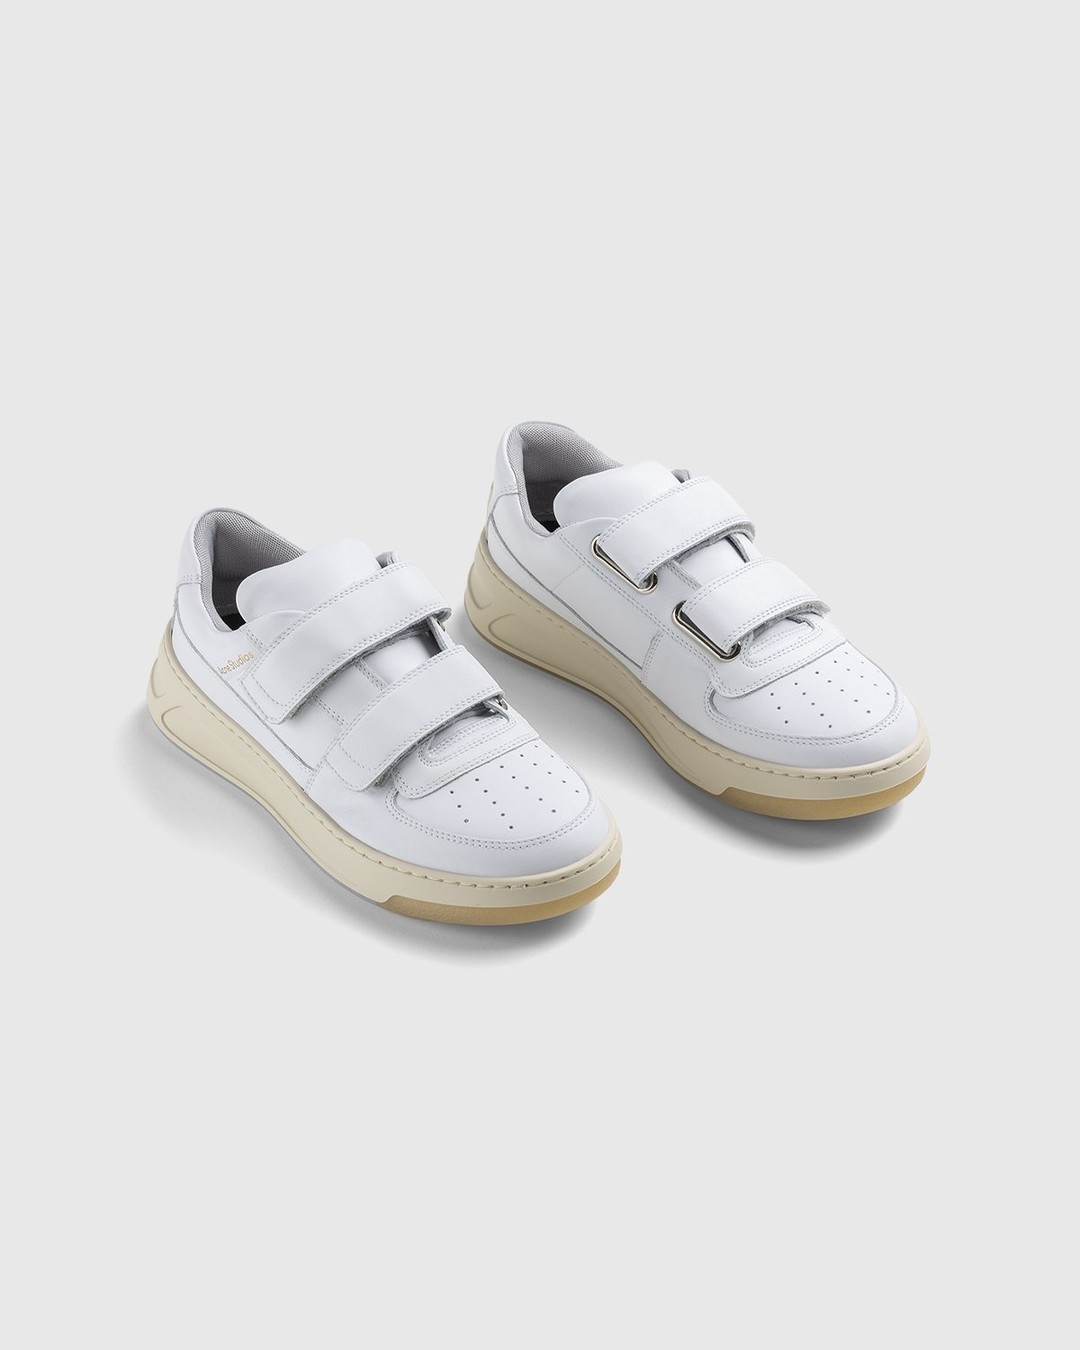 Acne Studios – Perey Velcro Sneakers | Shop